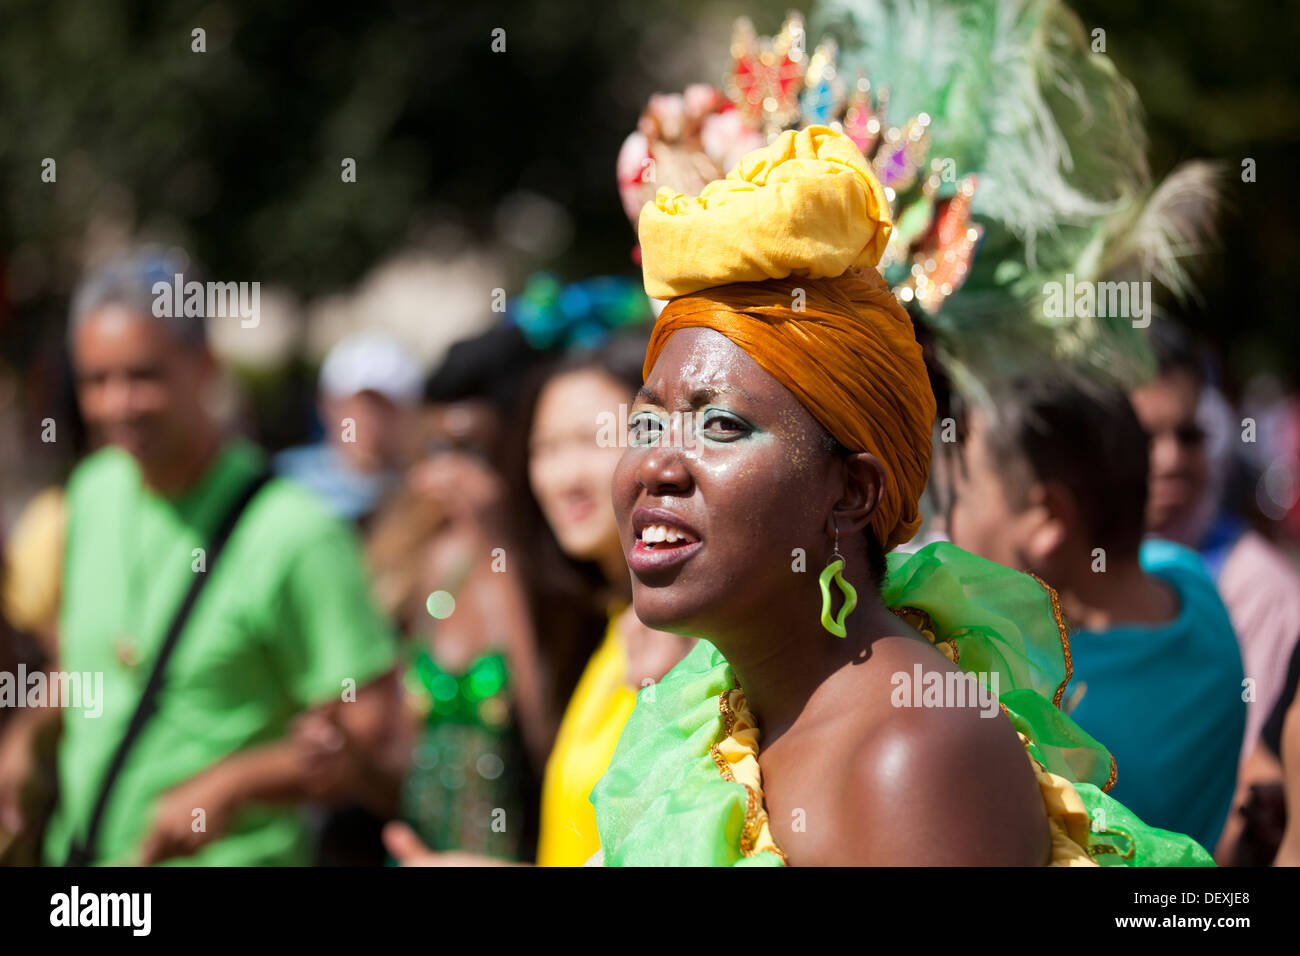 Brazilian samba dancer in traditional costume Stock Photo